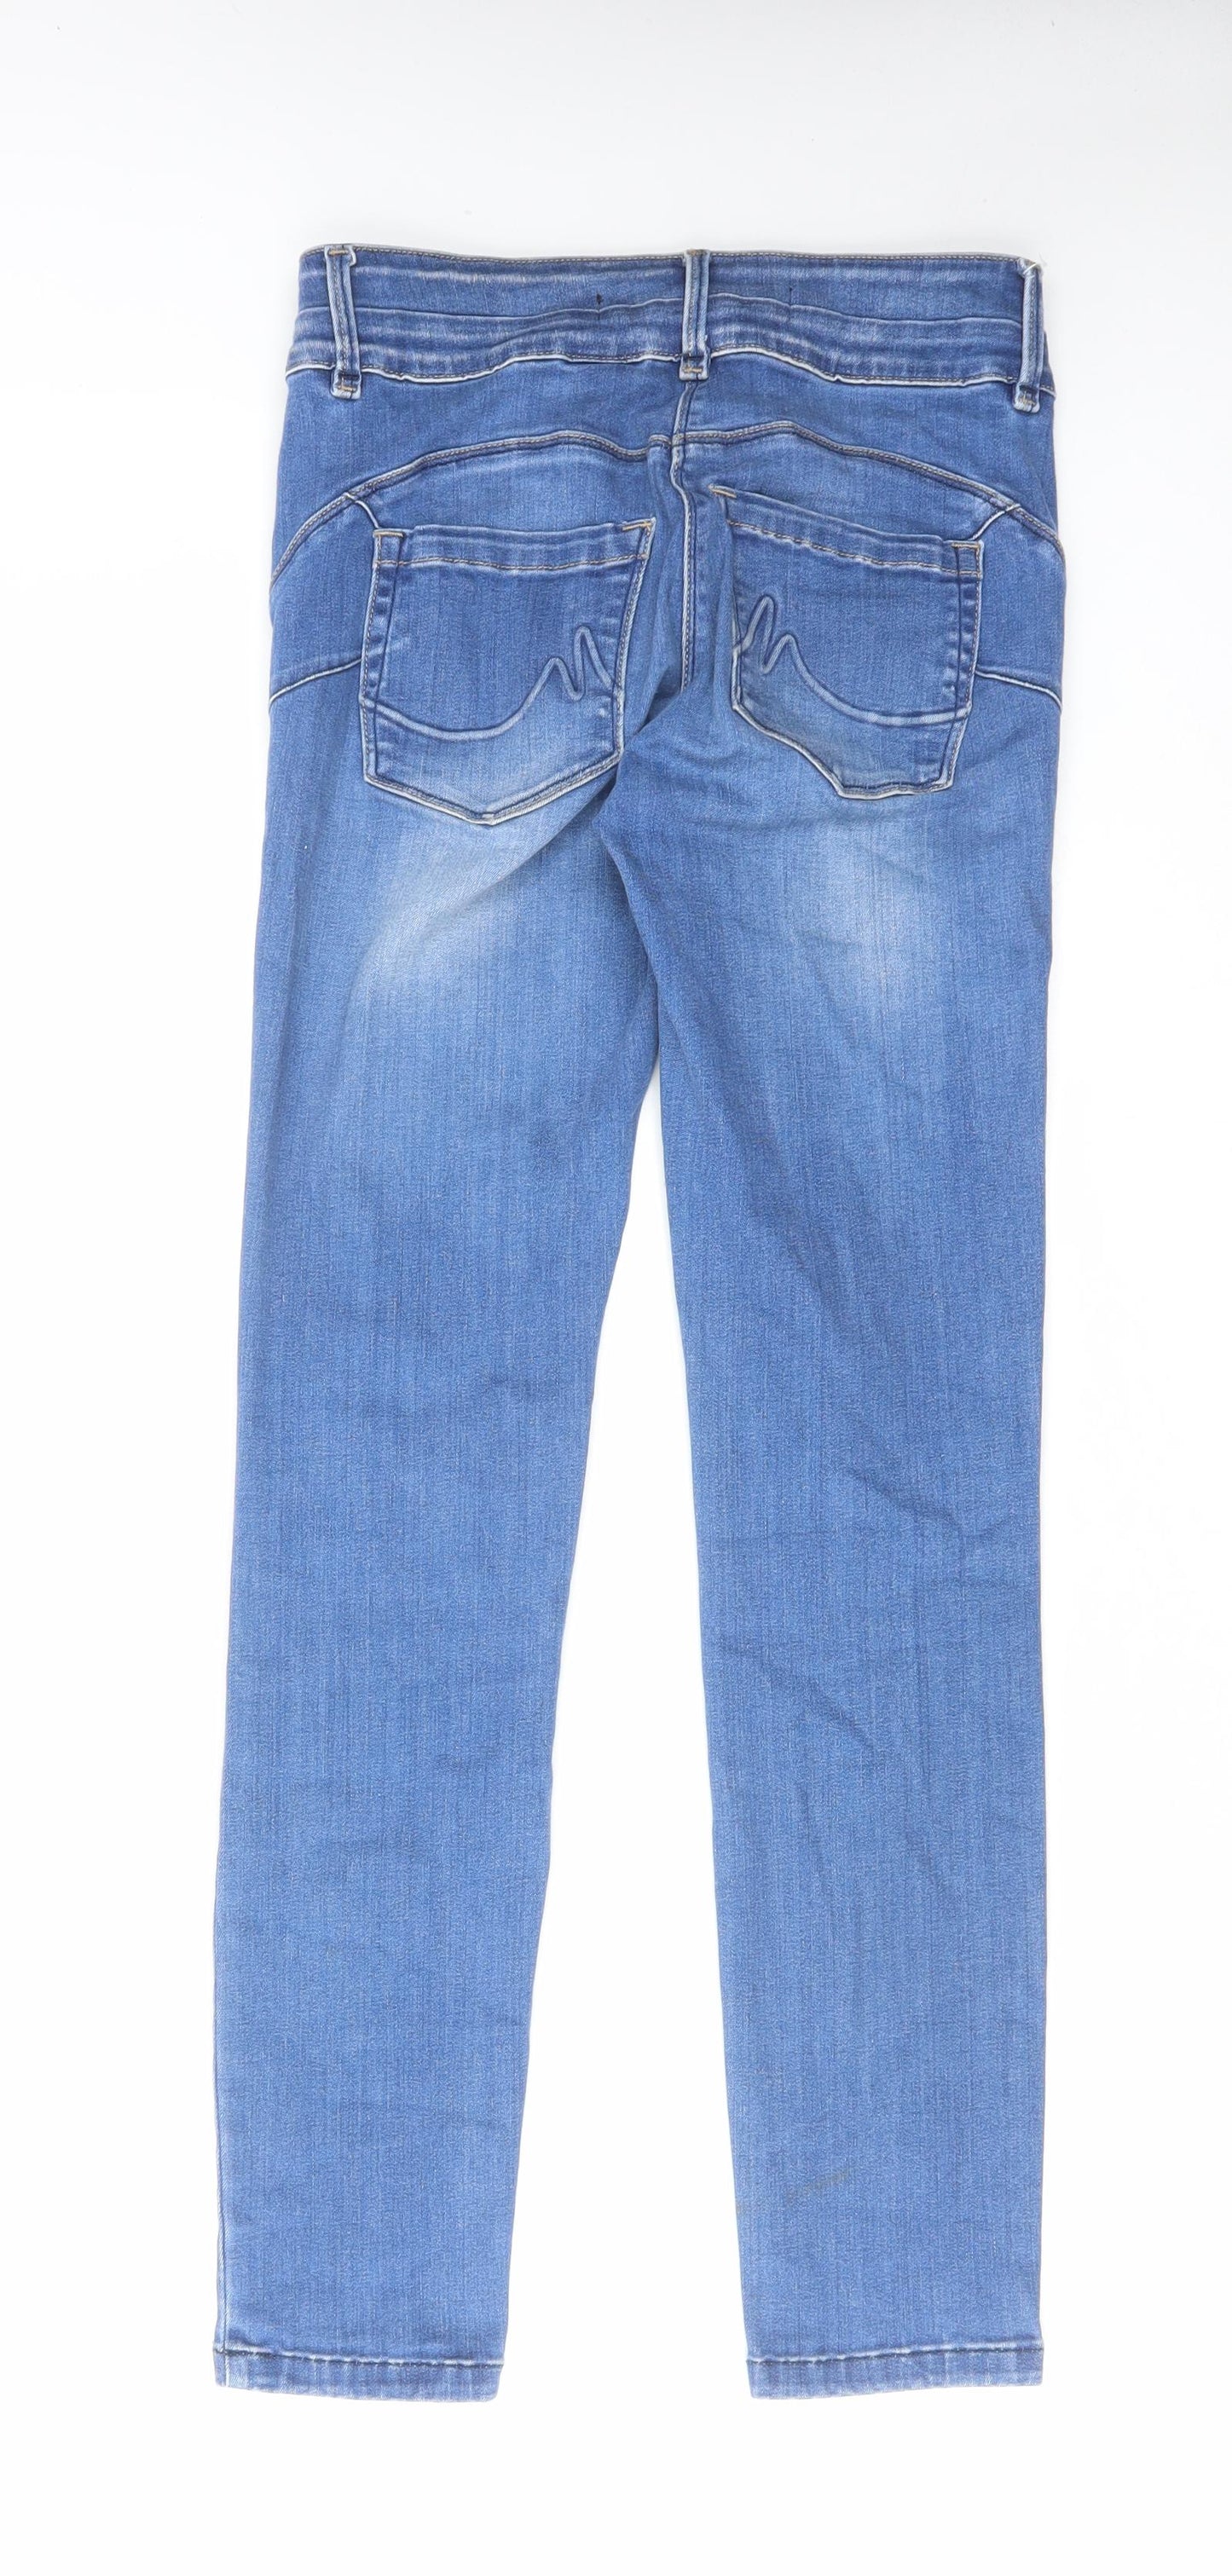 NEXT Womens Blue Cotton Skinny Jeans Size 8 L28 in Regular Zip